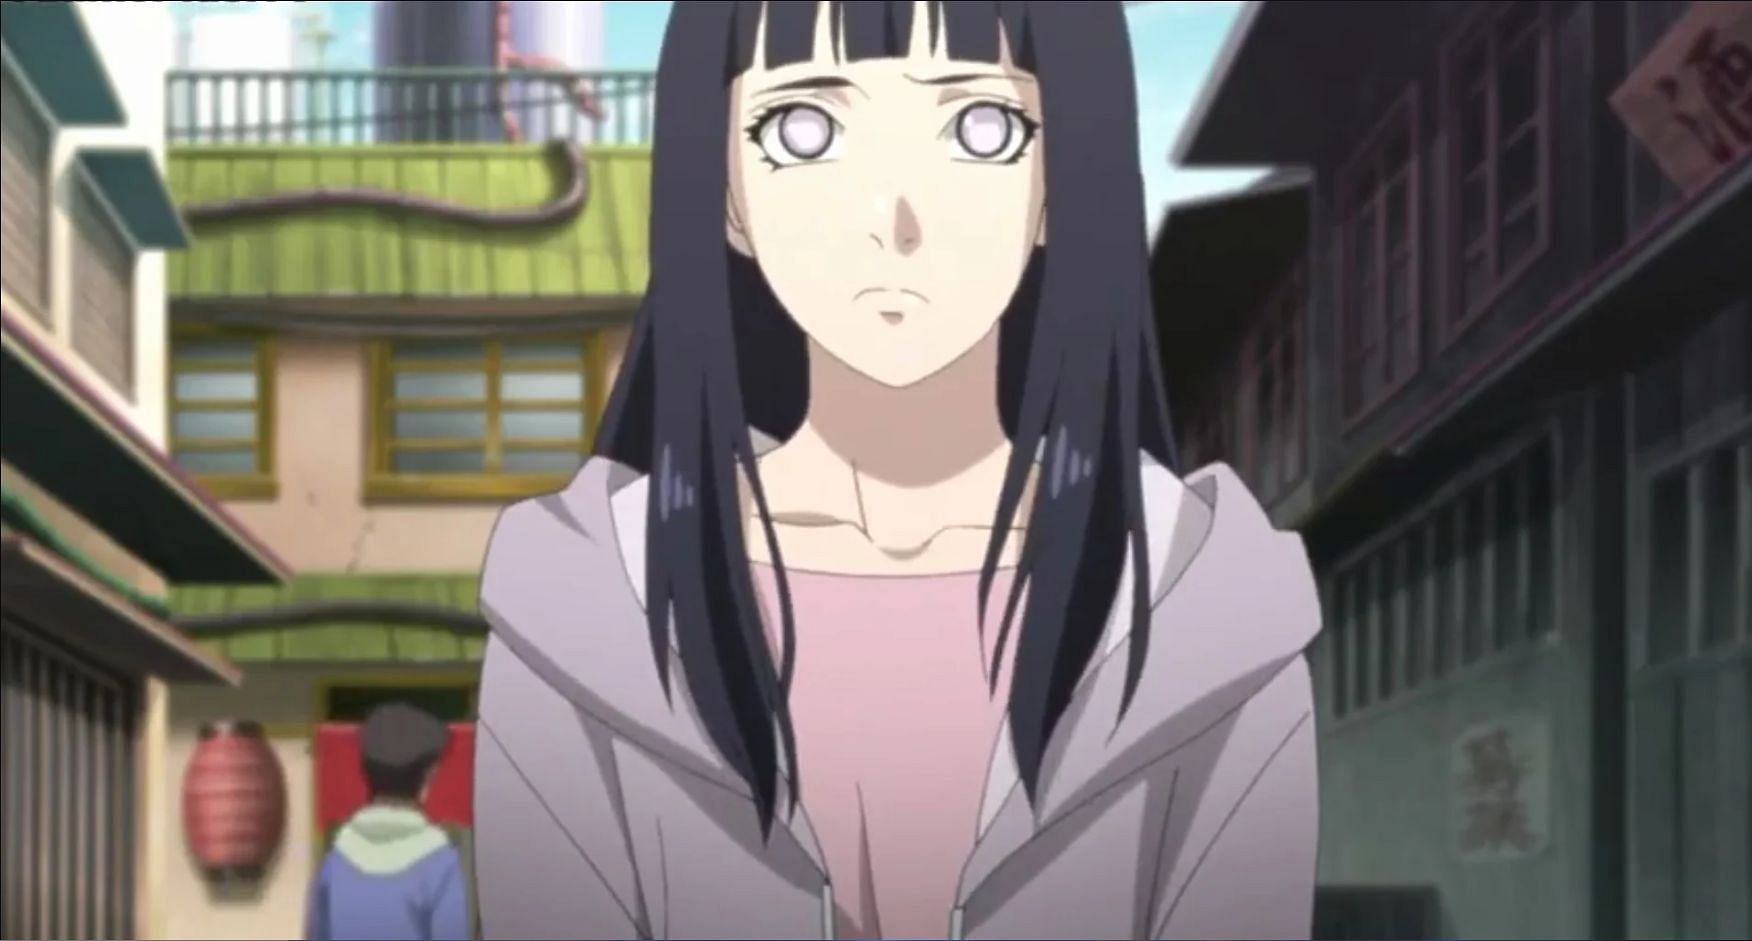 Hinata Hyuga as shown in the anime (Image via Naruto)